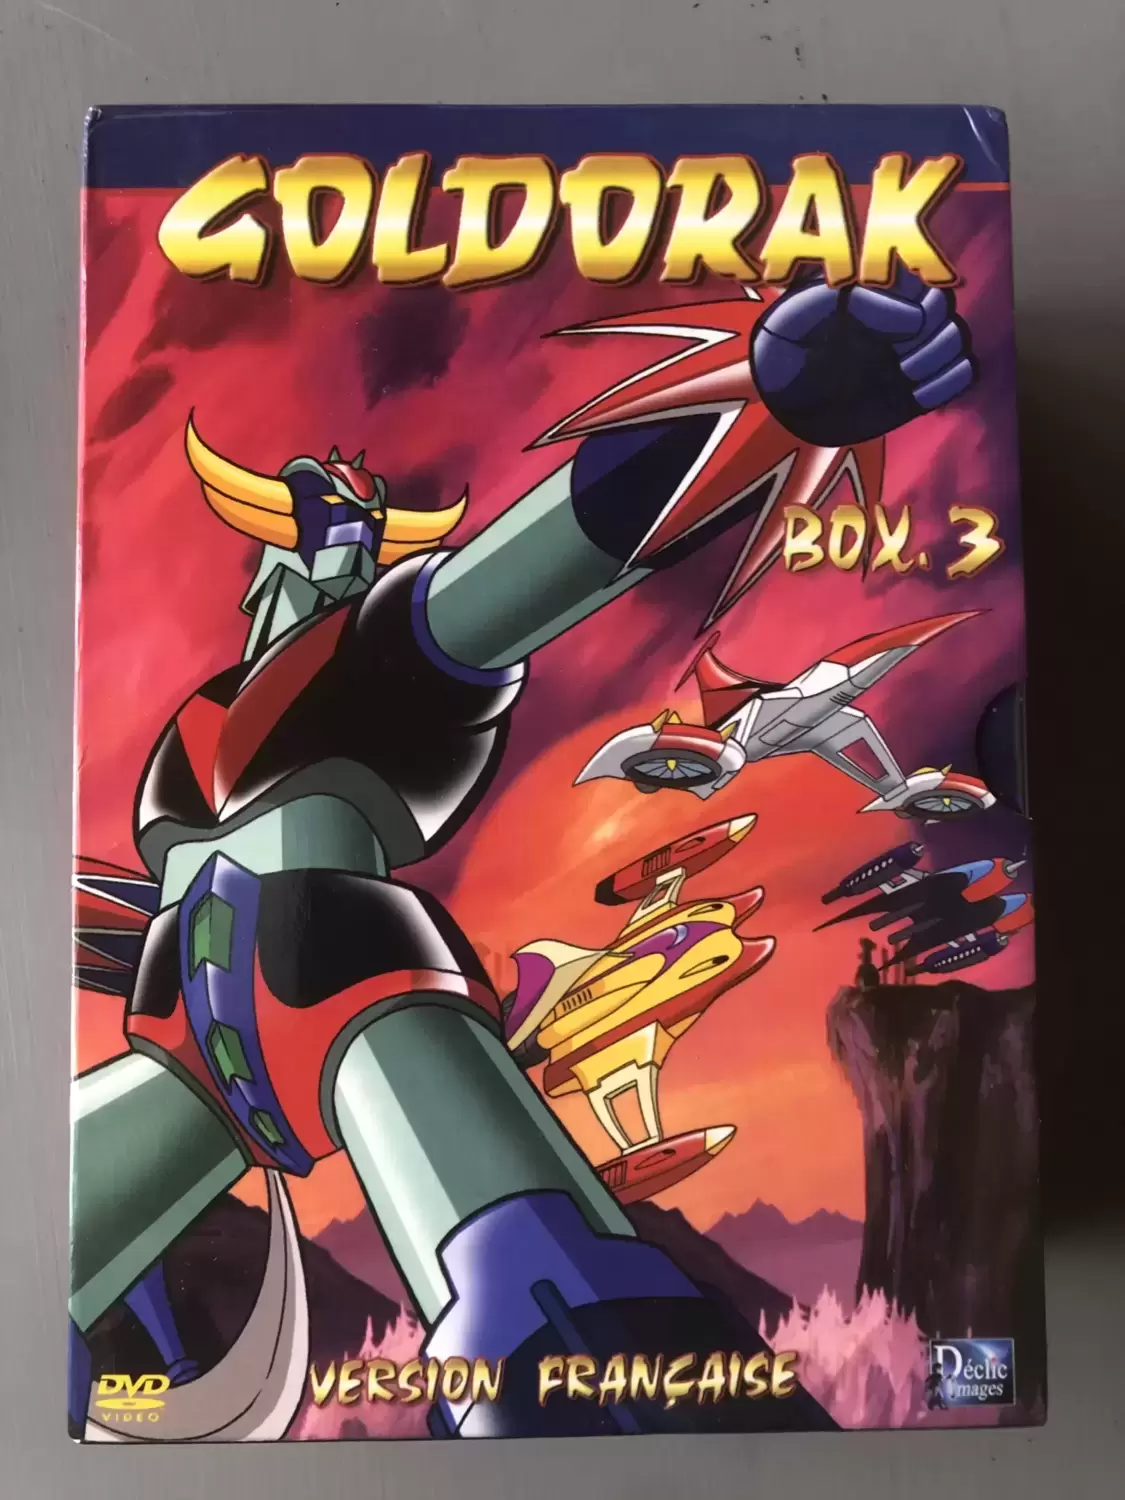 Goldorak Box 3 - Goldorak